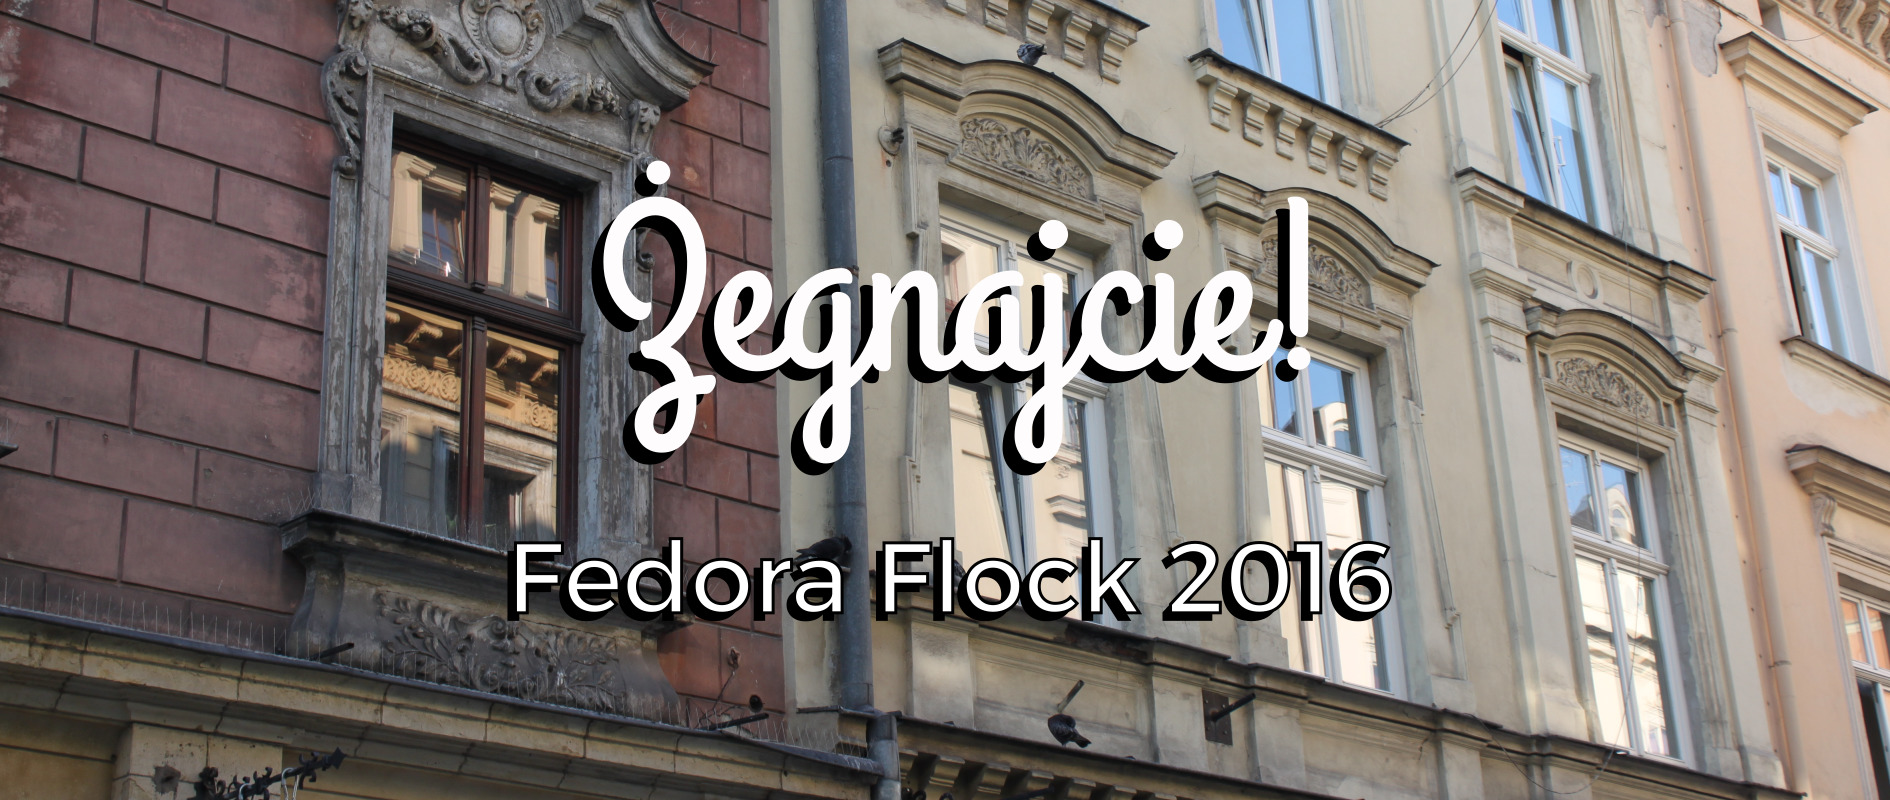 Żegnajcie! Fedora Flock 2016 in words